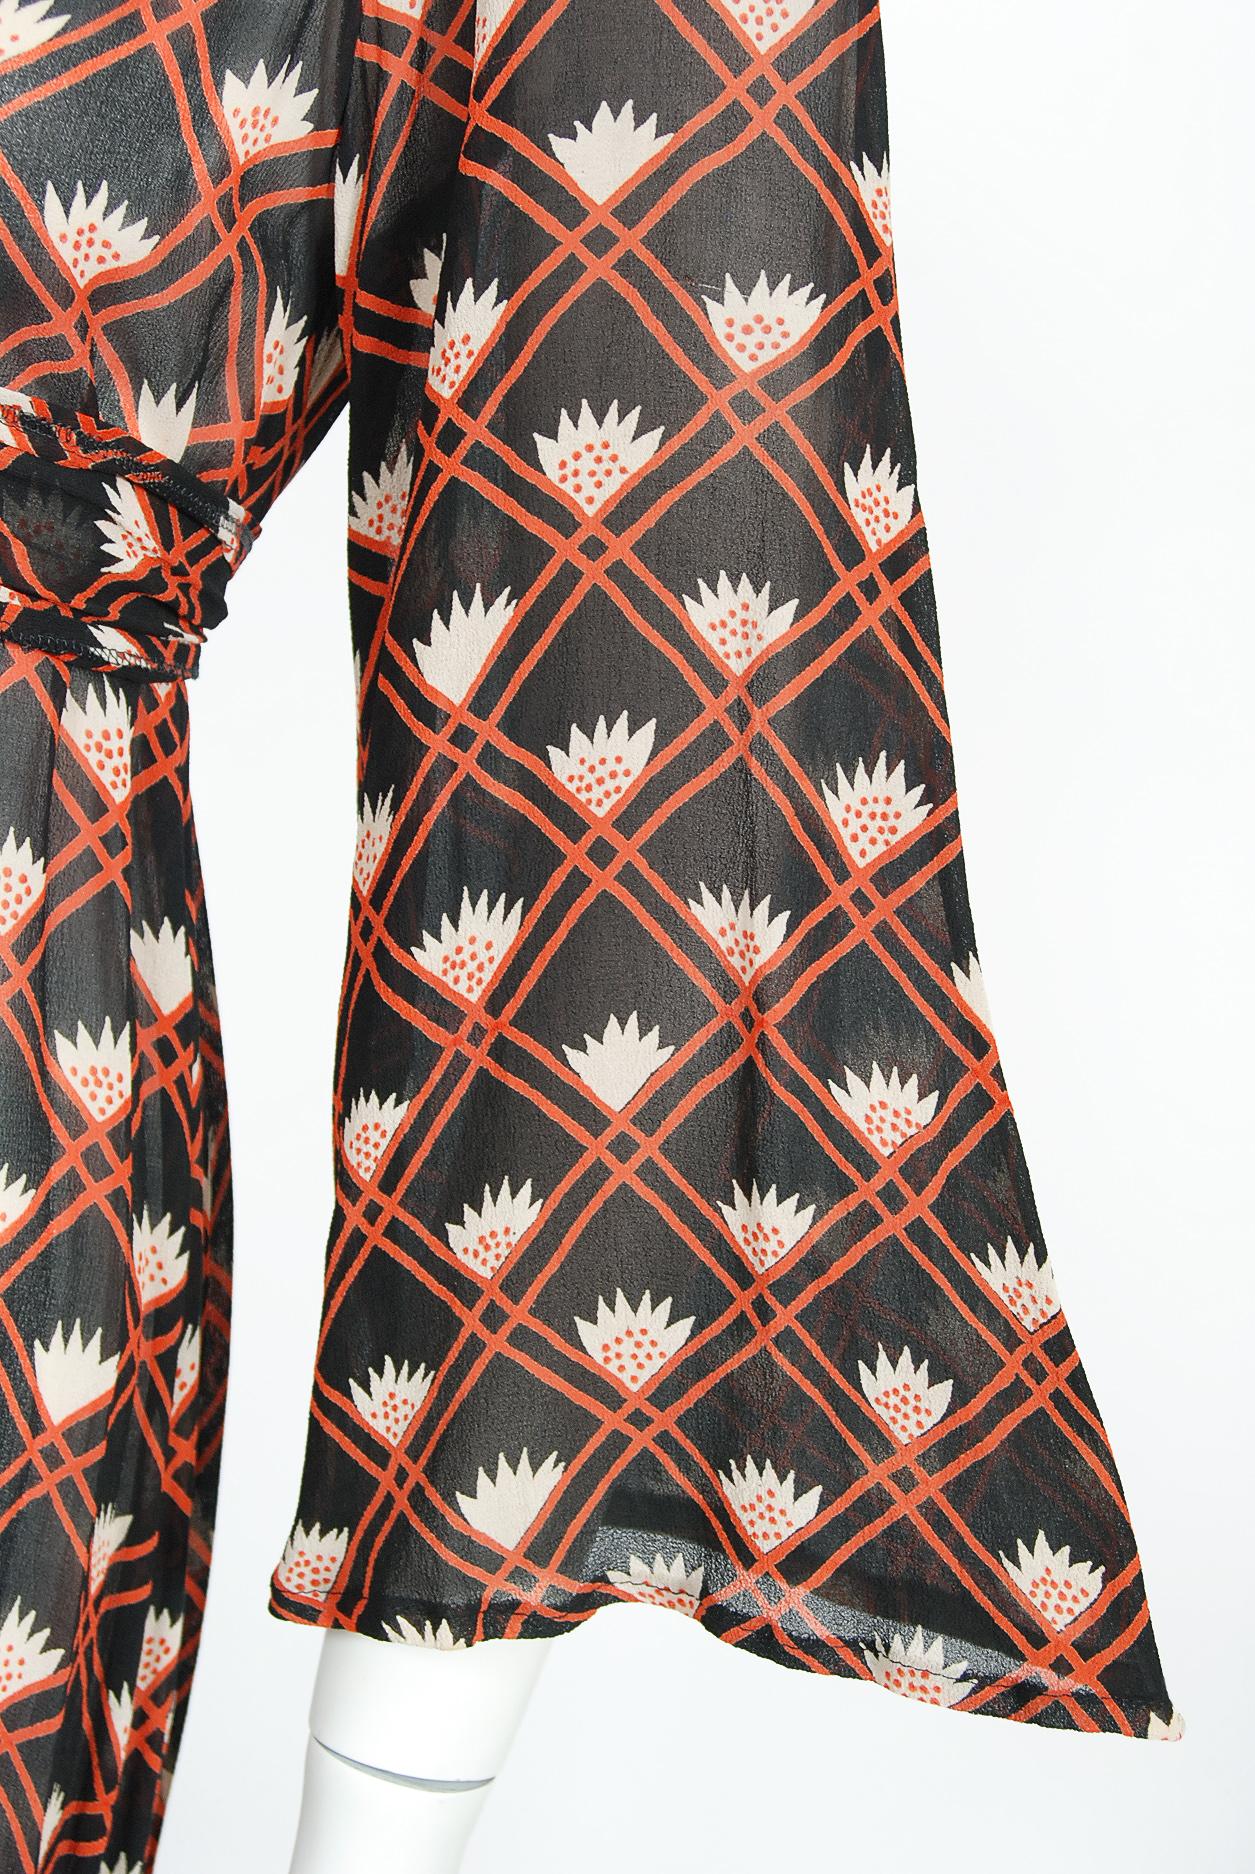 Vintage 1970s Ossie Clark 'Pineapple' Celia Birtwell Print Silk Crepe Maxi Dress 4